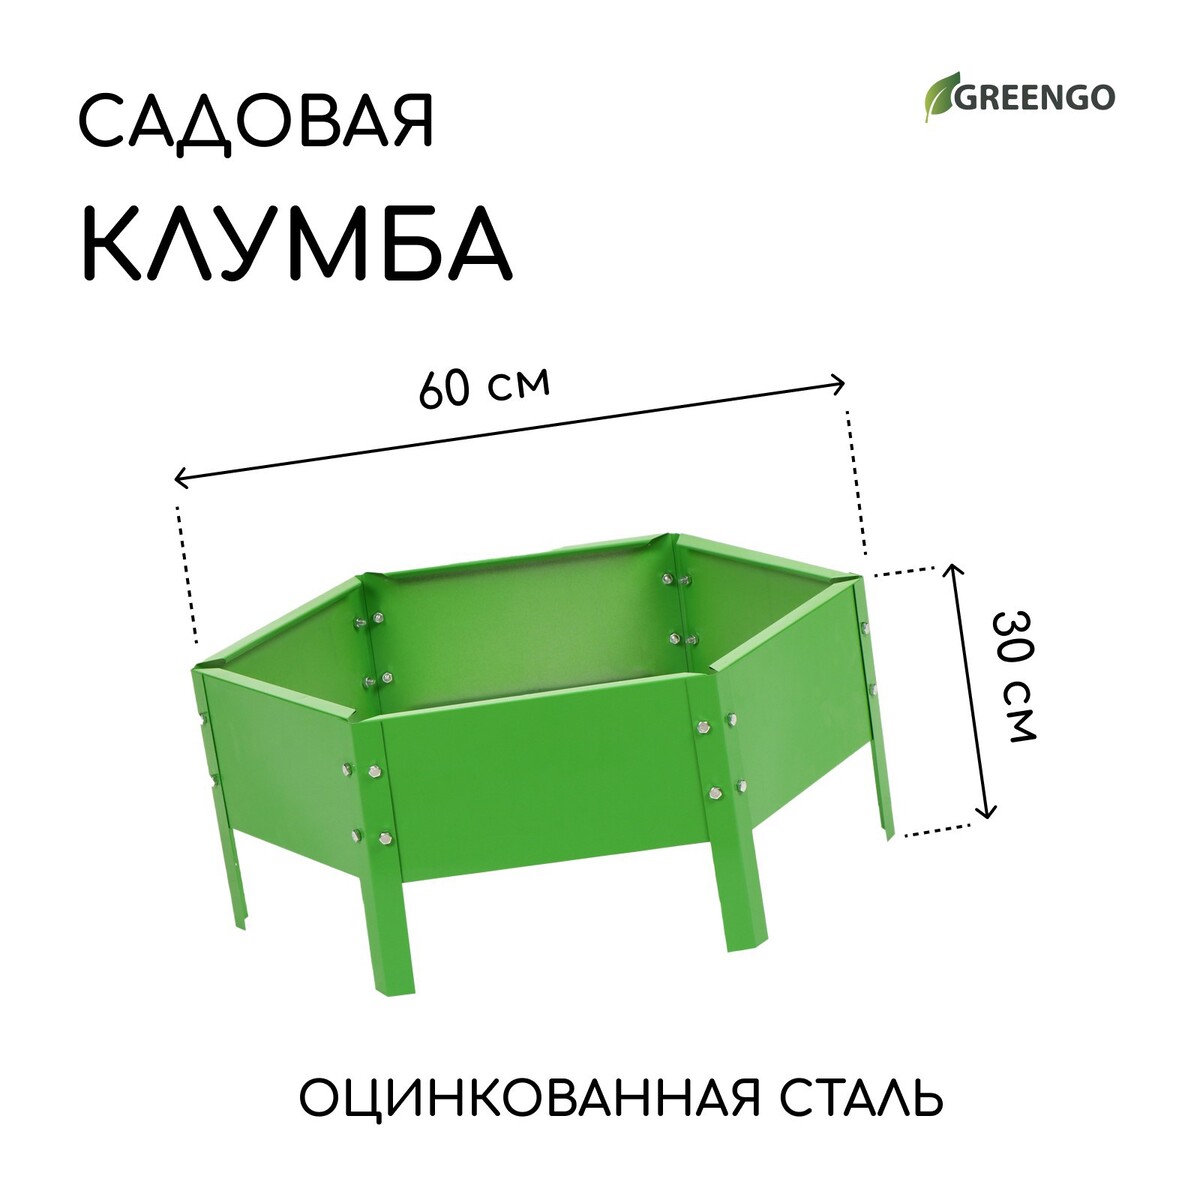 Клумба оцинкованная, d = 60 см, h = 15 см, ярко-зеленая, greengo клумба оцинкованная d 60 см h 15 см ярко зеленая greengo